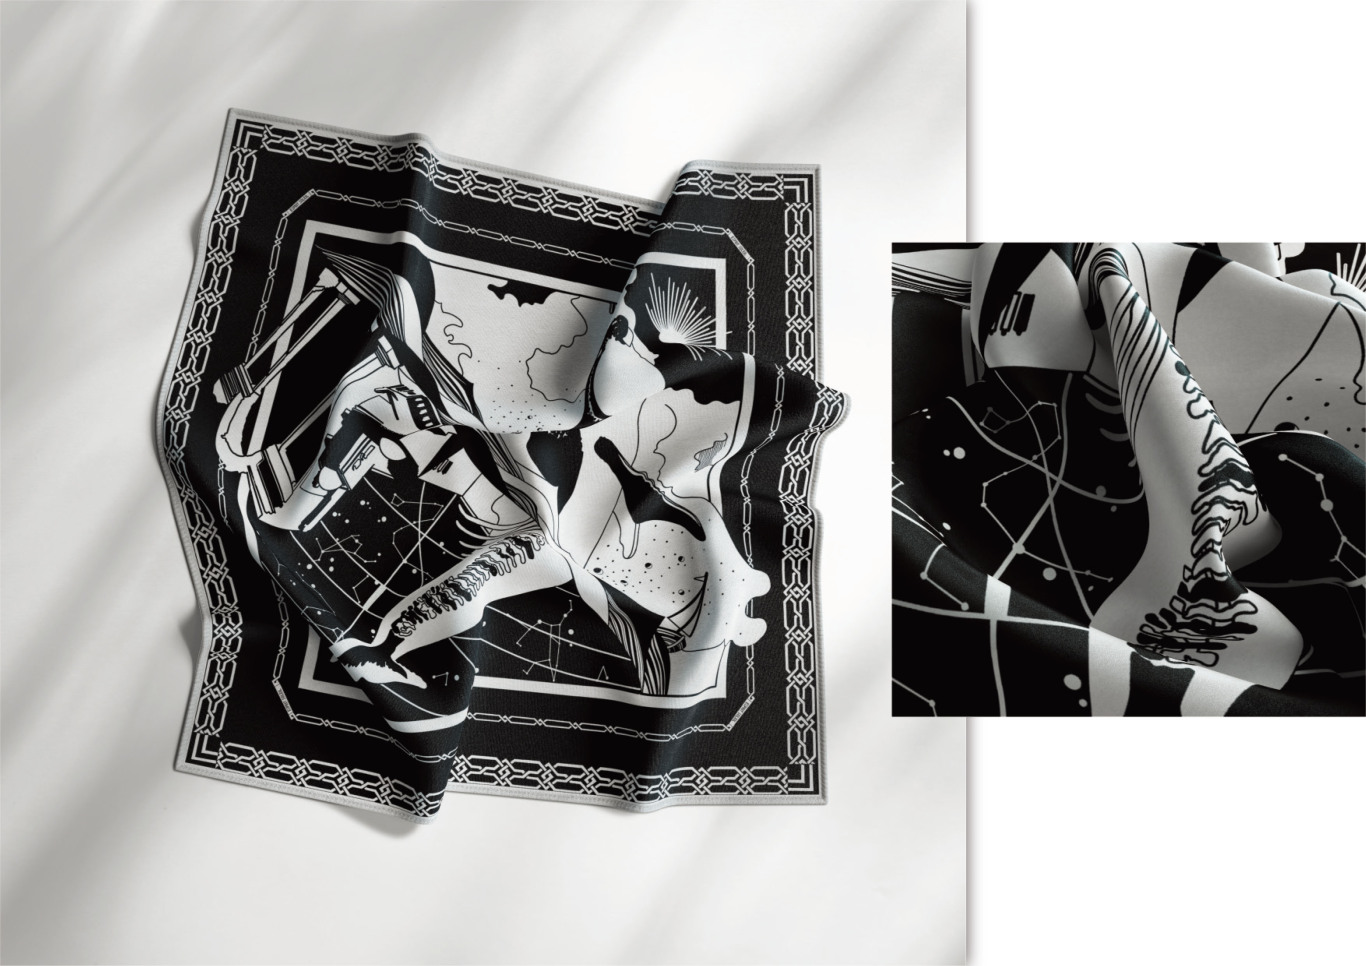 Esprit Soleil海洋主题合作款丝巾设计图7